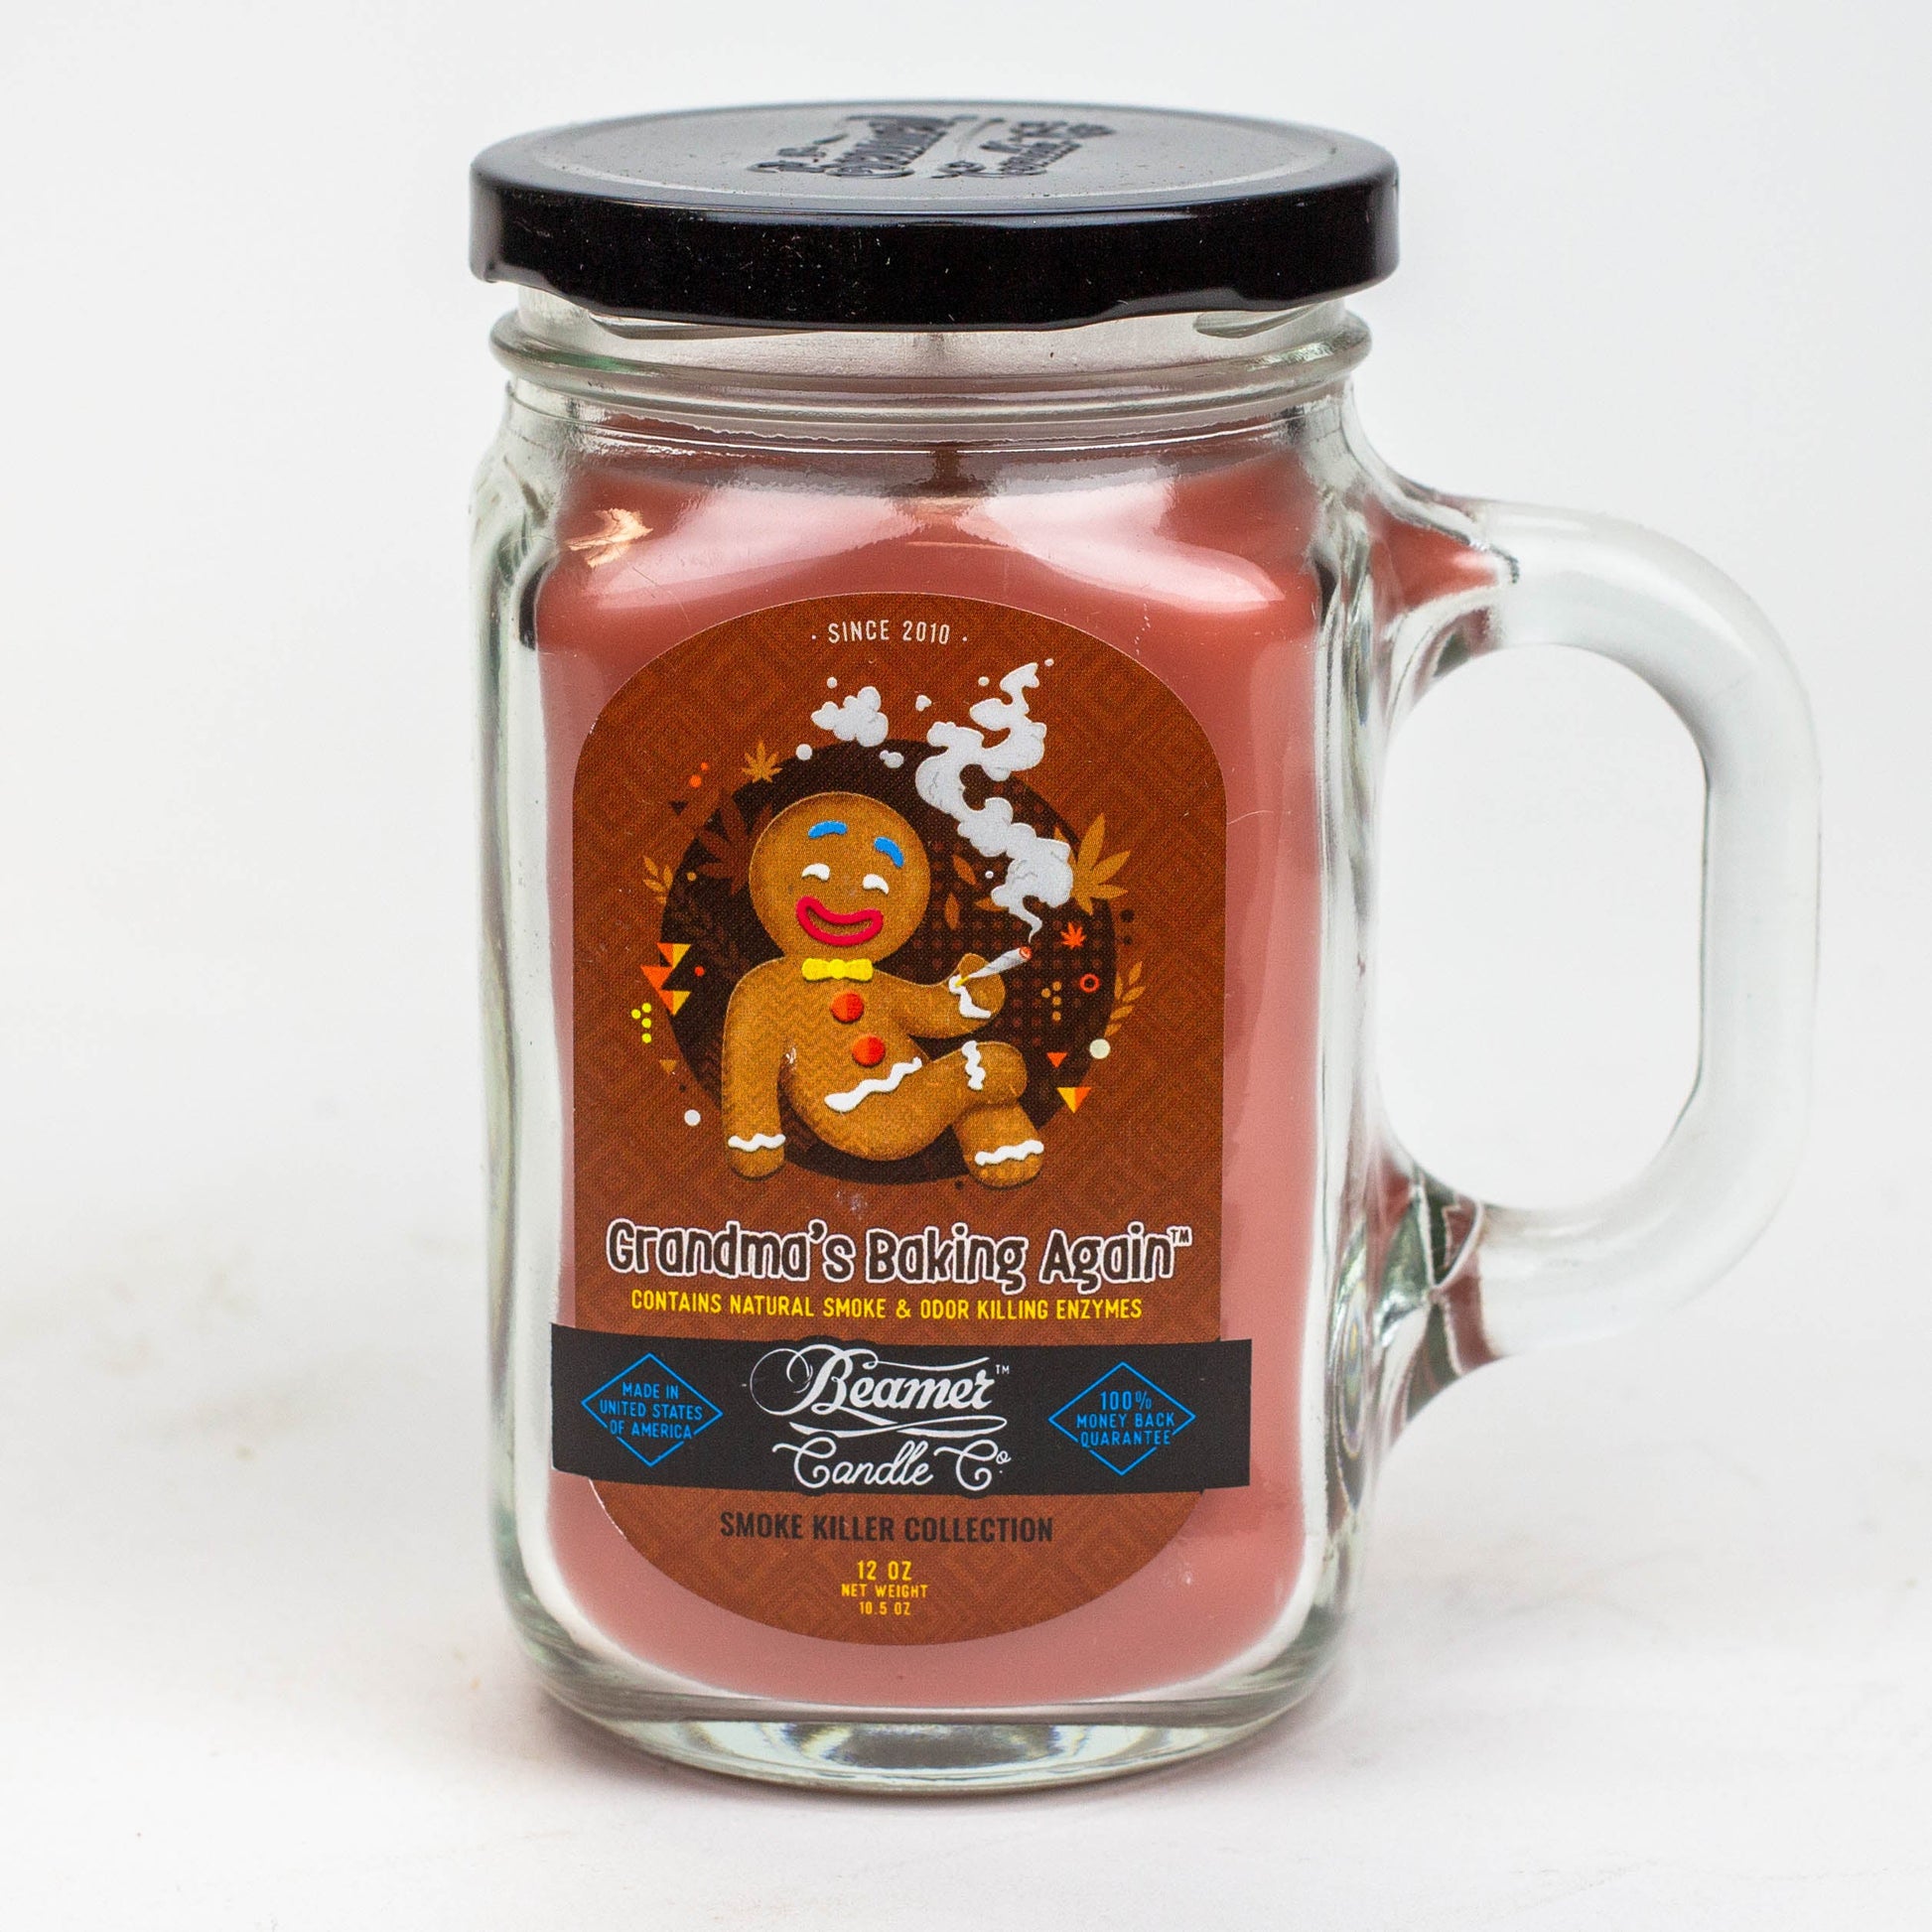 Beamer Candle Co. Ultra Premium Jar Smoke killer collection candle_18